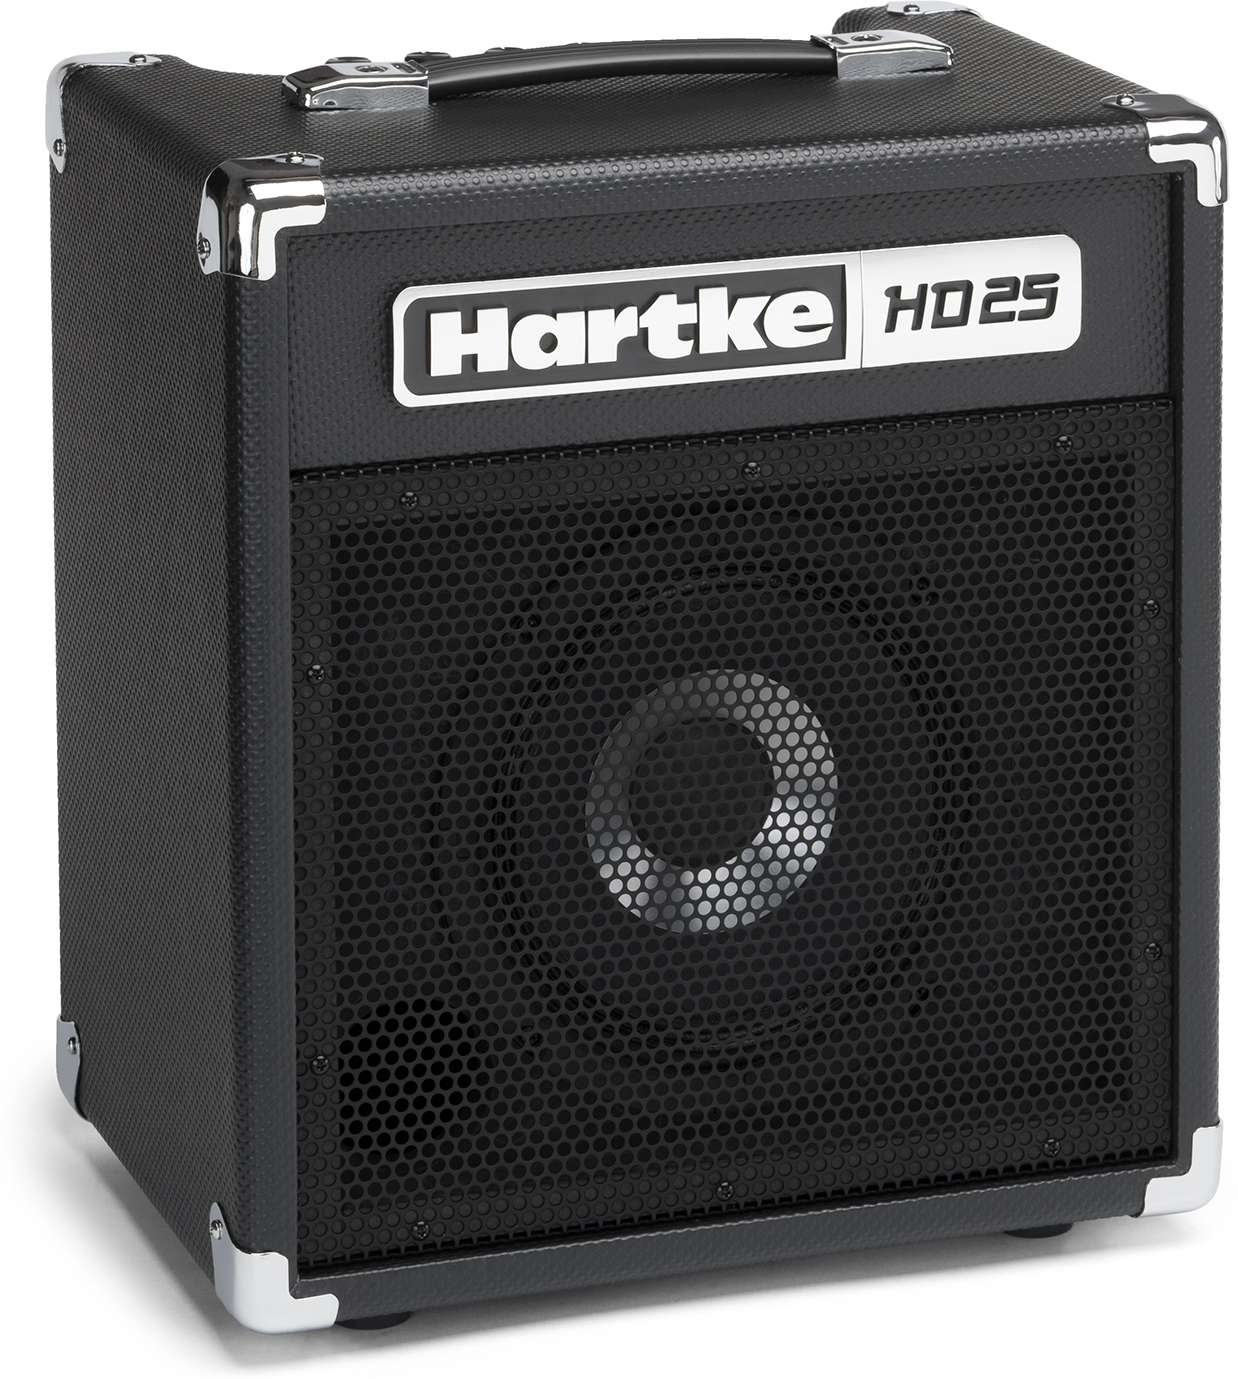 Hartke Hd25 Combo - Combo amplificador para bajo - Main picture